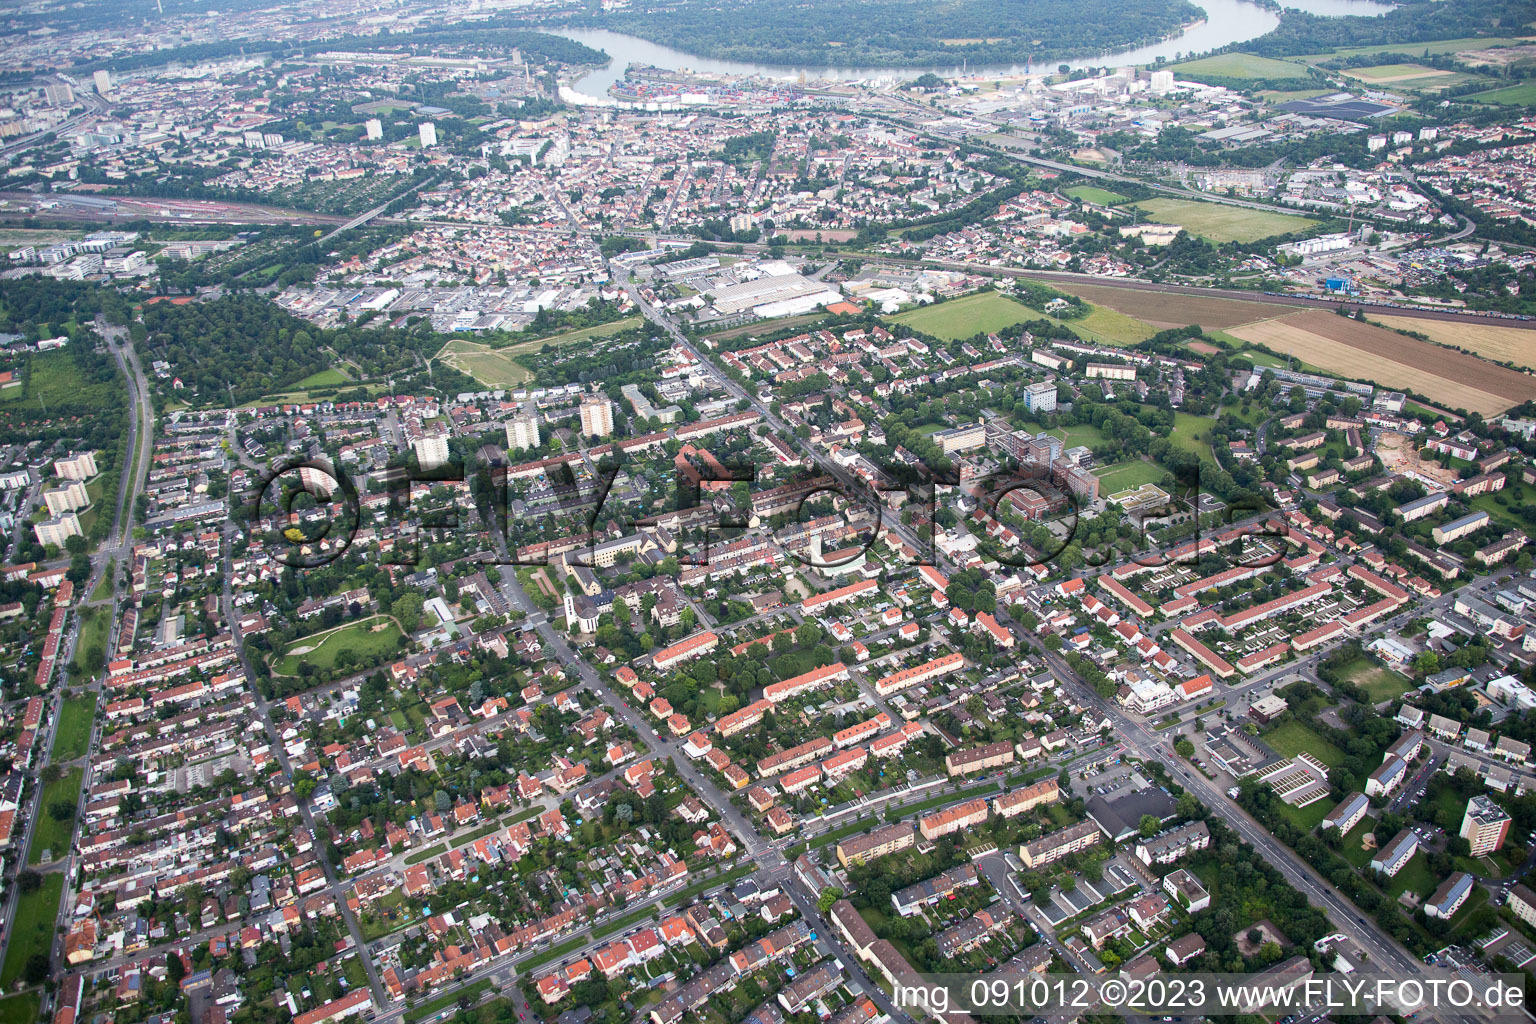 Photographie aérienne de Quartier Gartenstadt in Ludwigshafen am Rhein dans le département Rhénanie-Palatinat, Allemagne